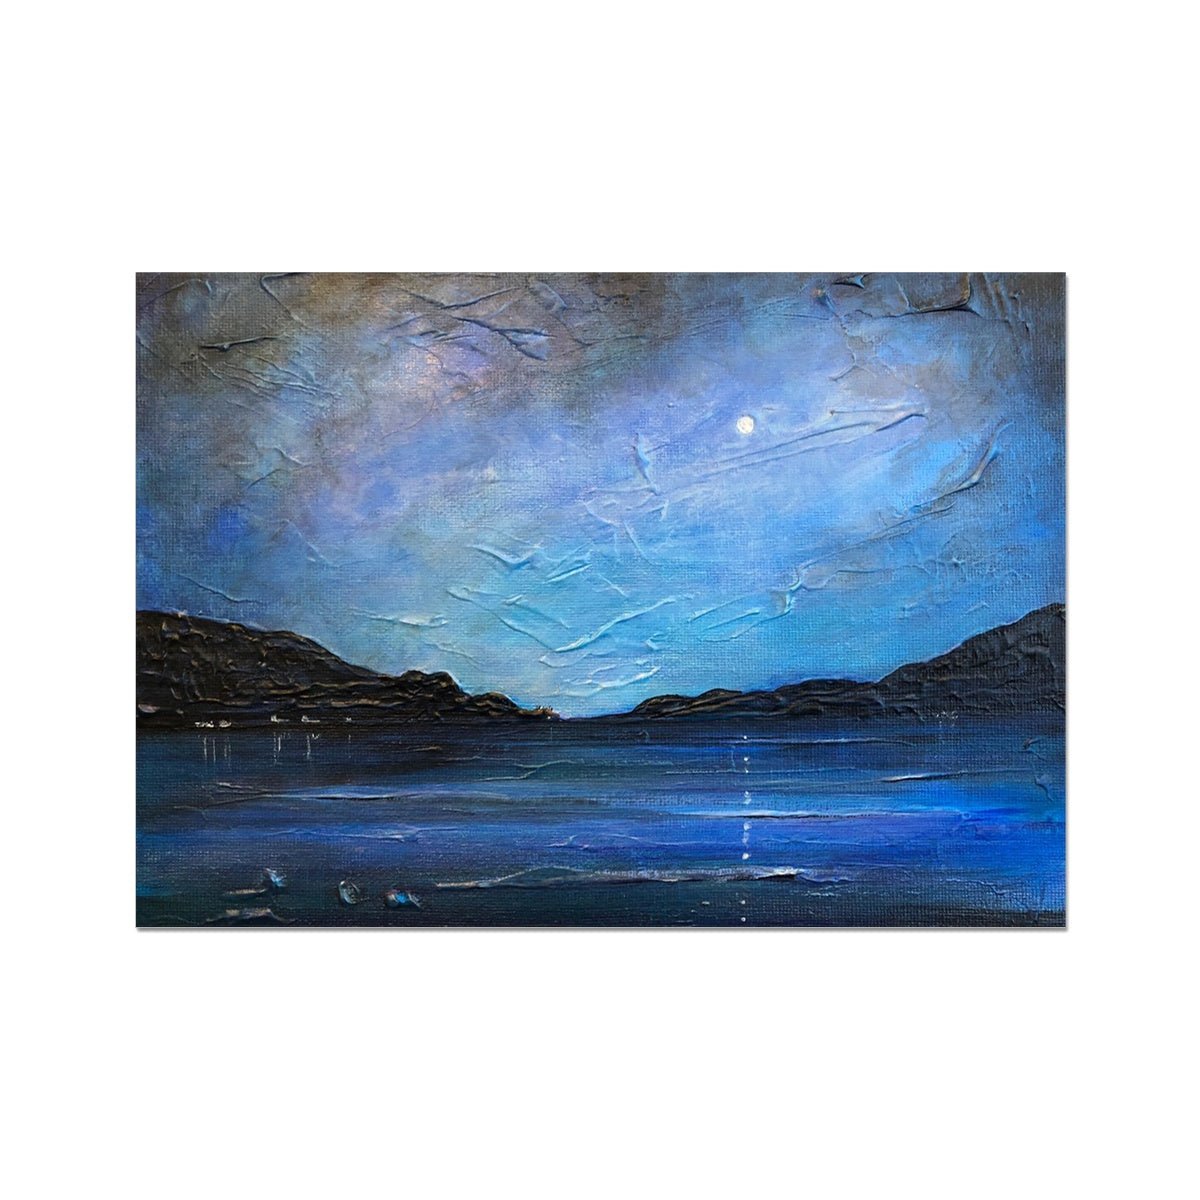 Loch Ness Moonlight Painting | Fine Art Prints From Scotland-Unframed Prints-Scottish Lochs & Mountains Art Gallery-A2 Landscape-Paintings, Prints, Homeware, Art Gifts From Scotland By Scottish Artist Kevin Hunter